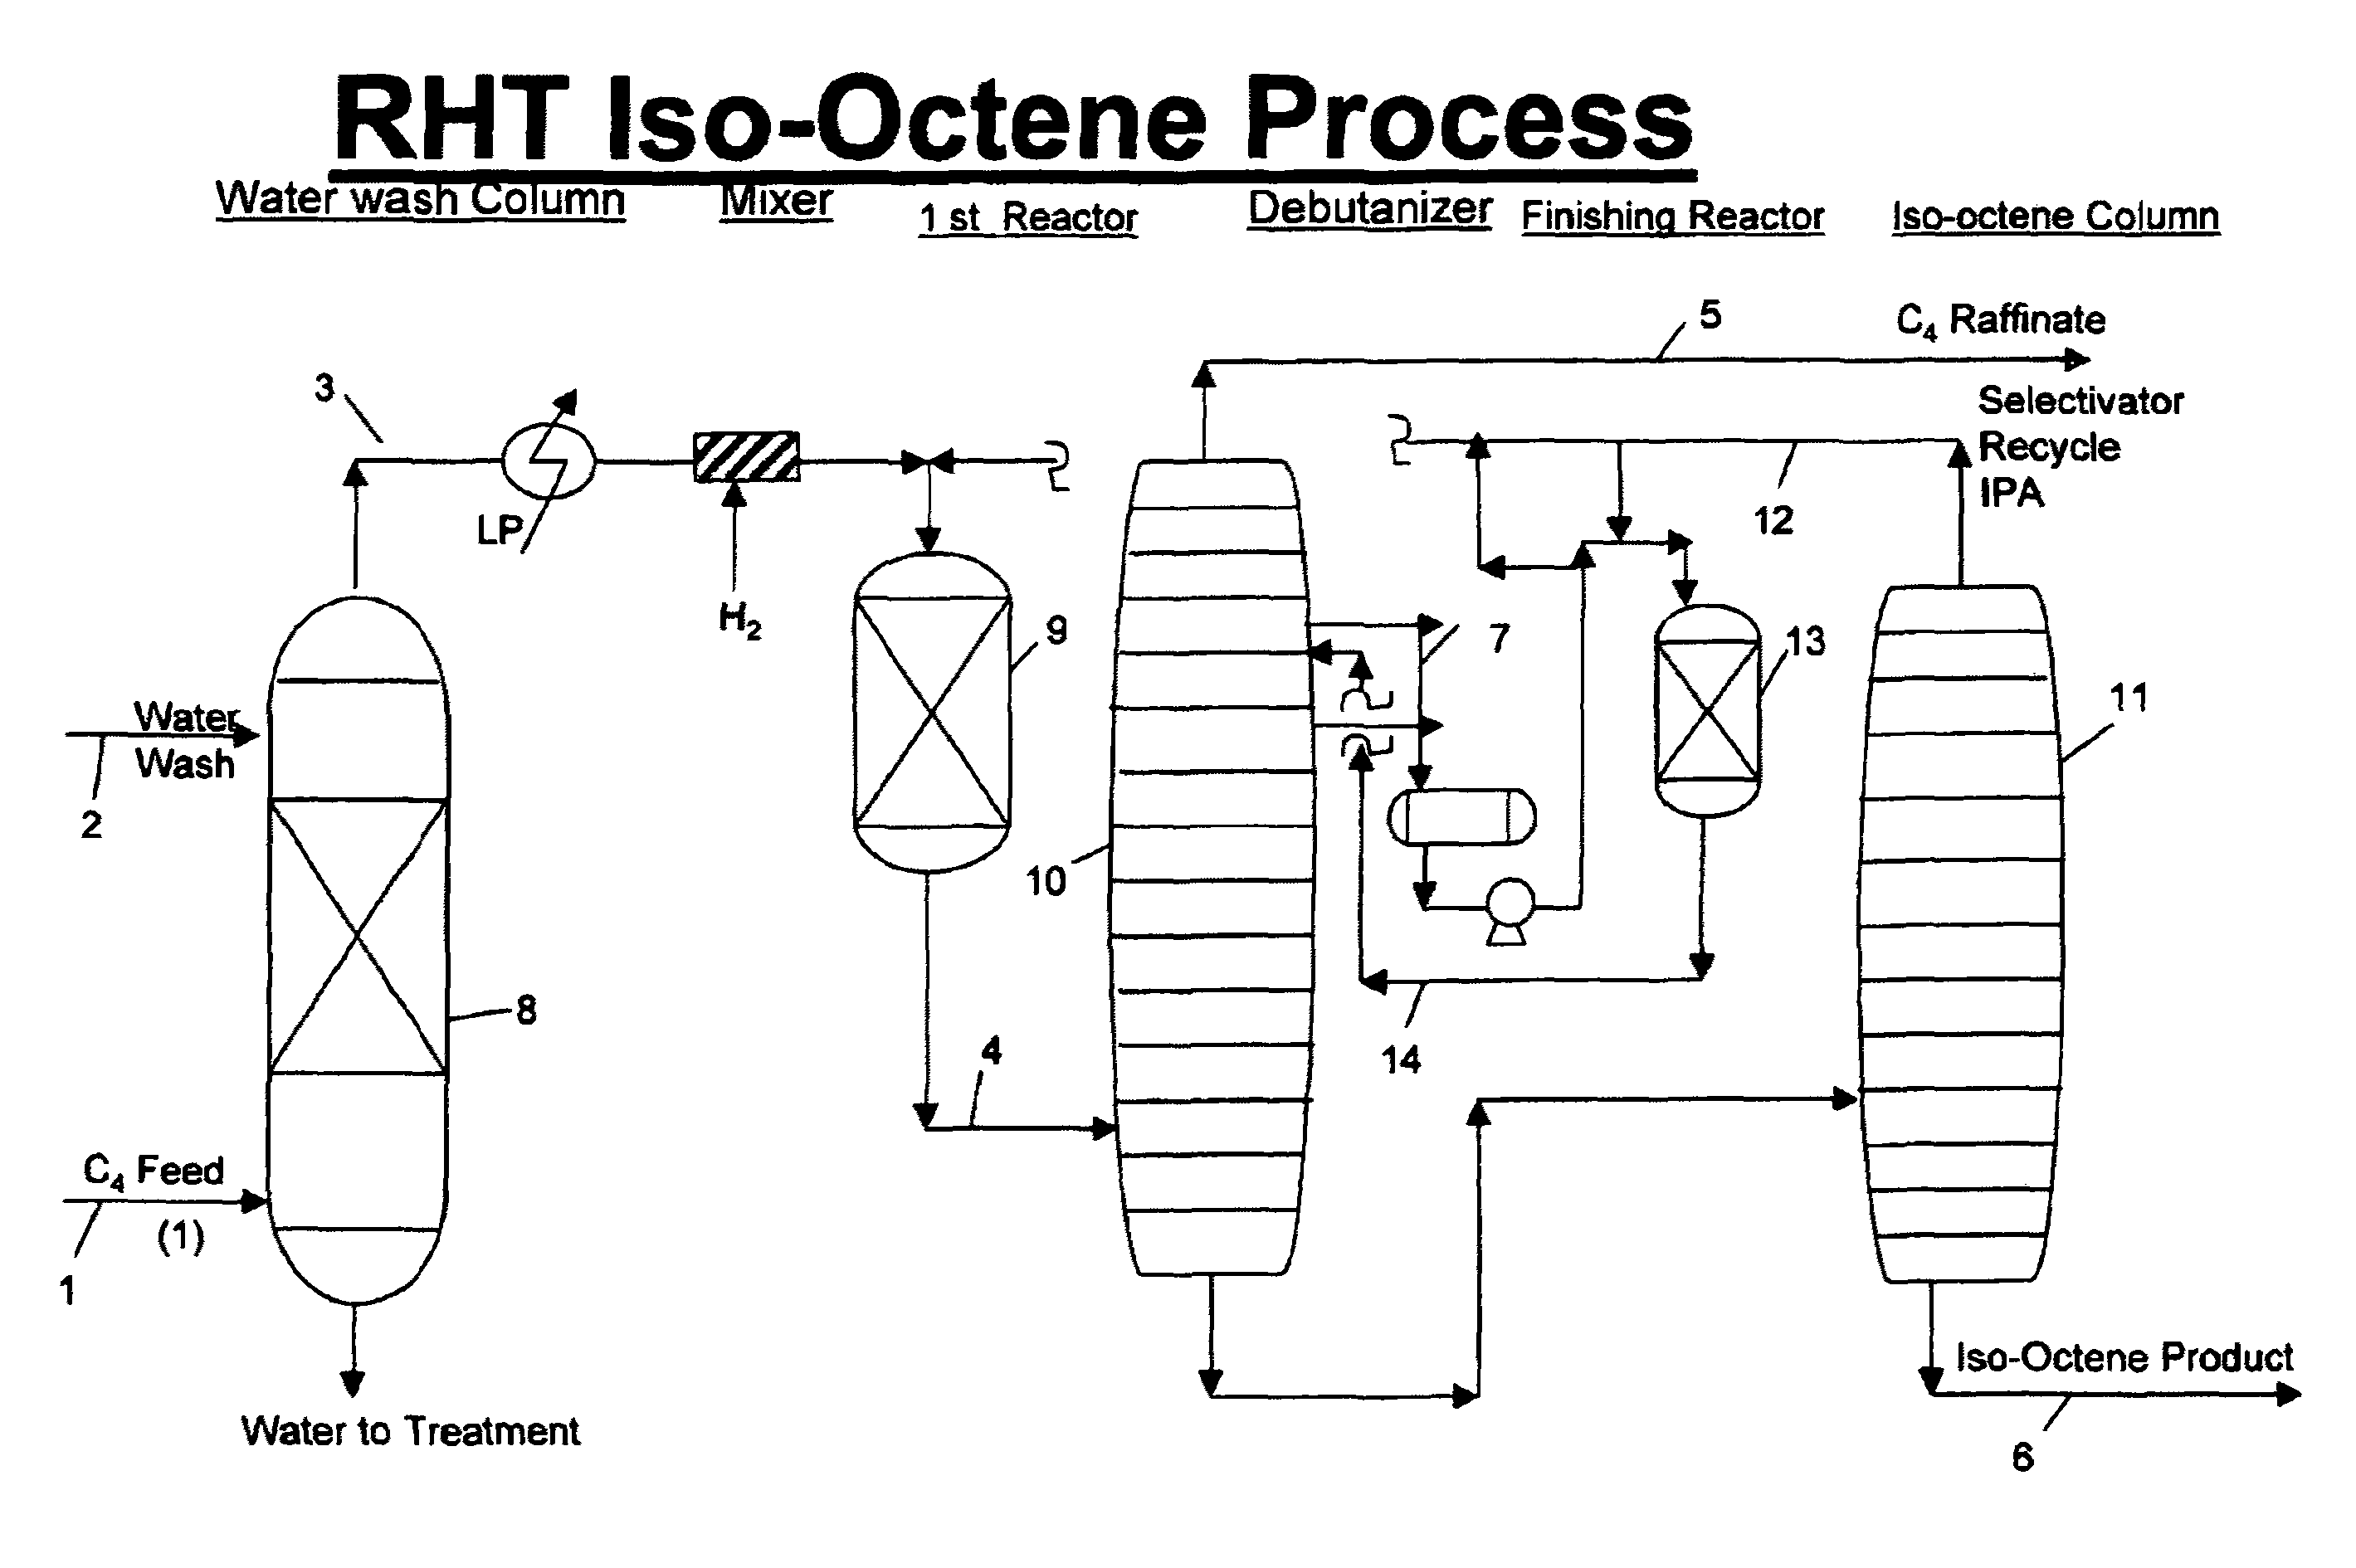 Isooctene/isooctane process